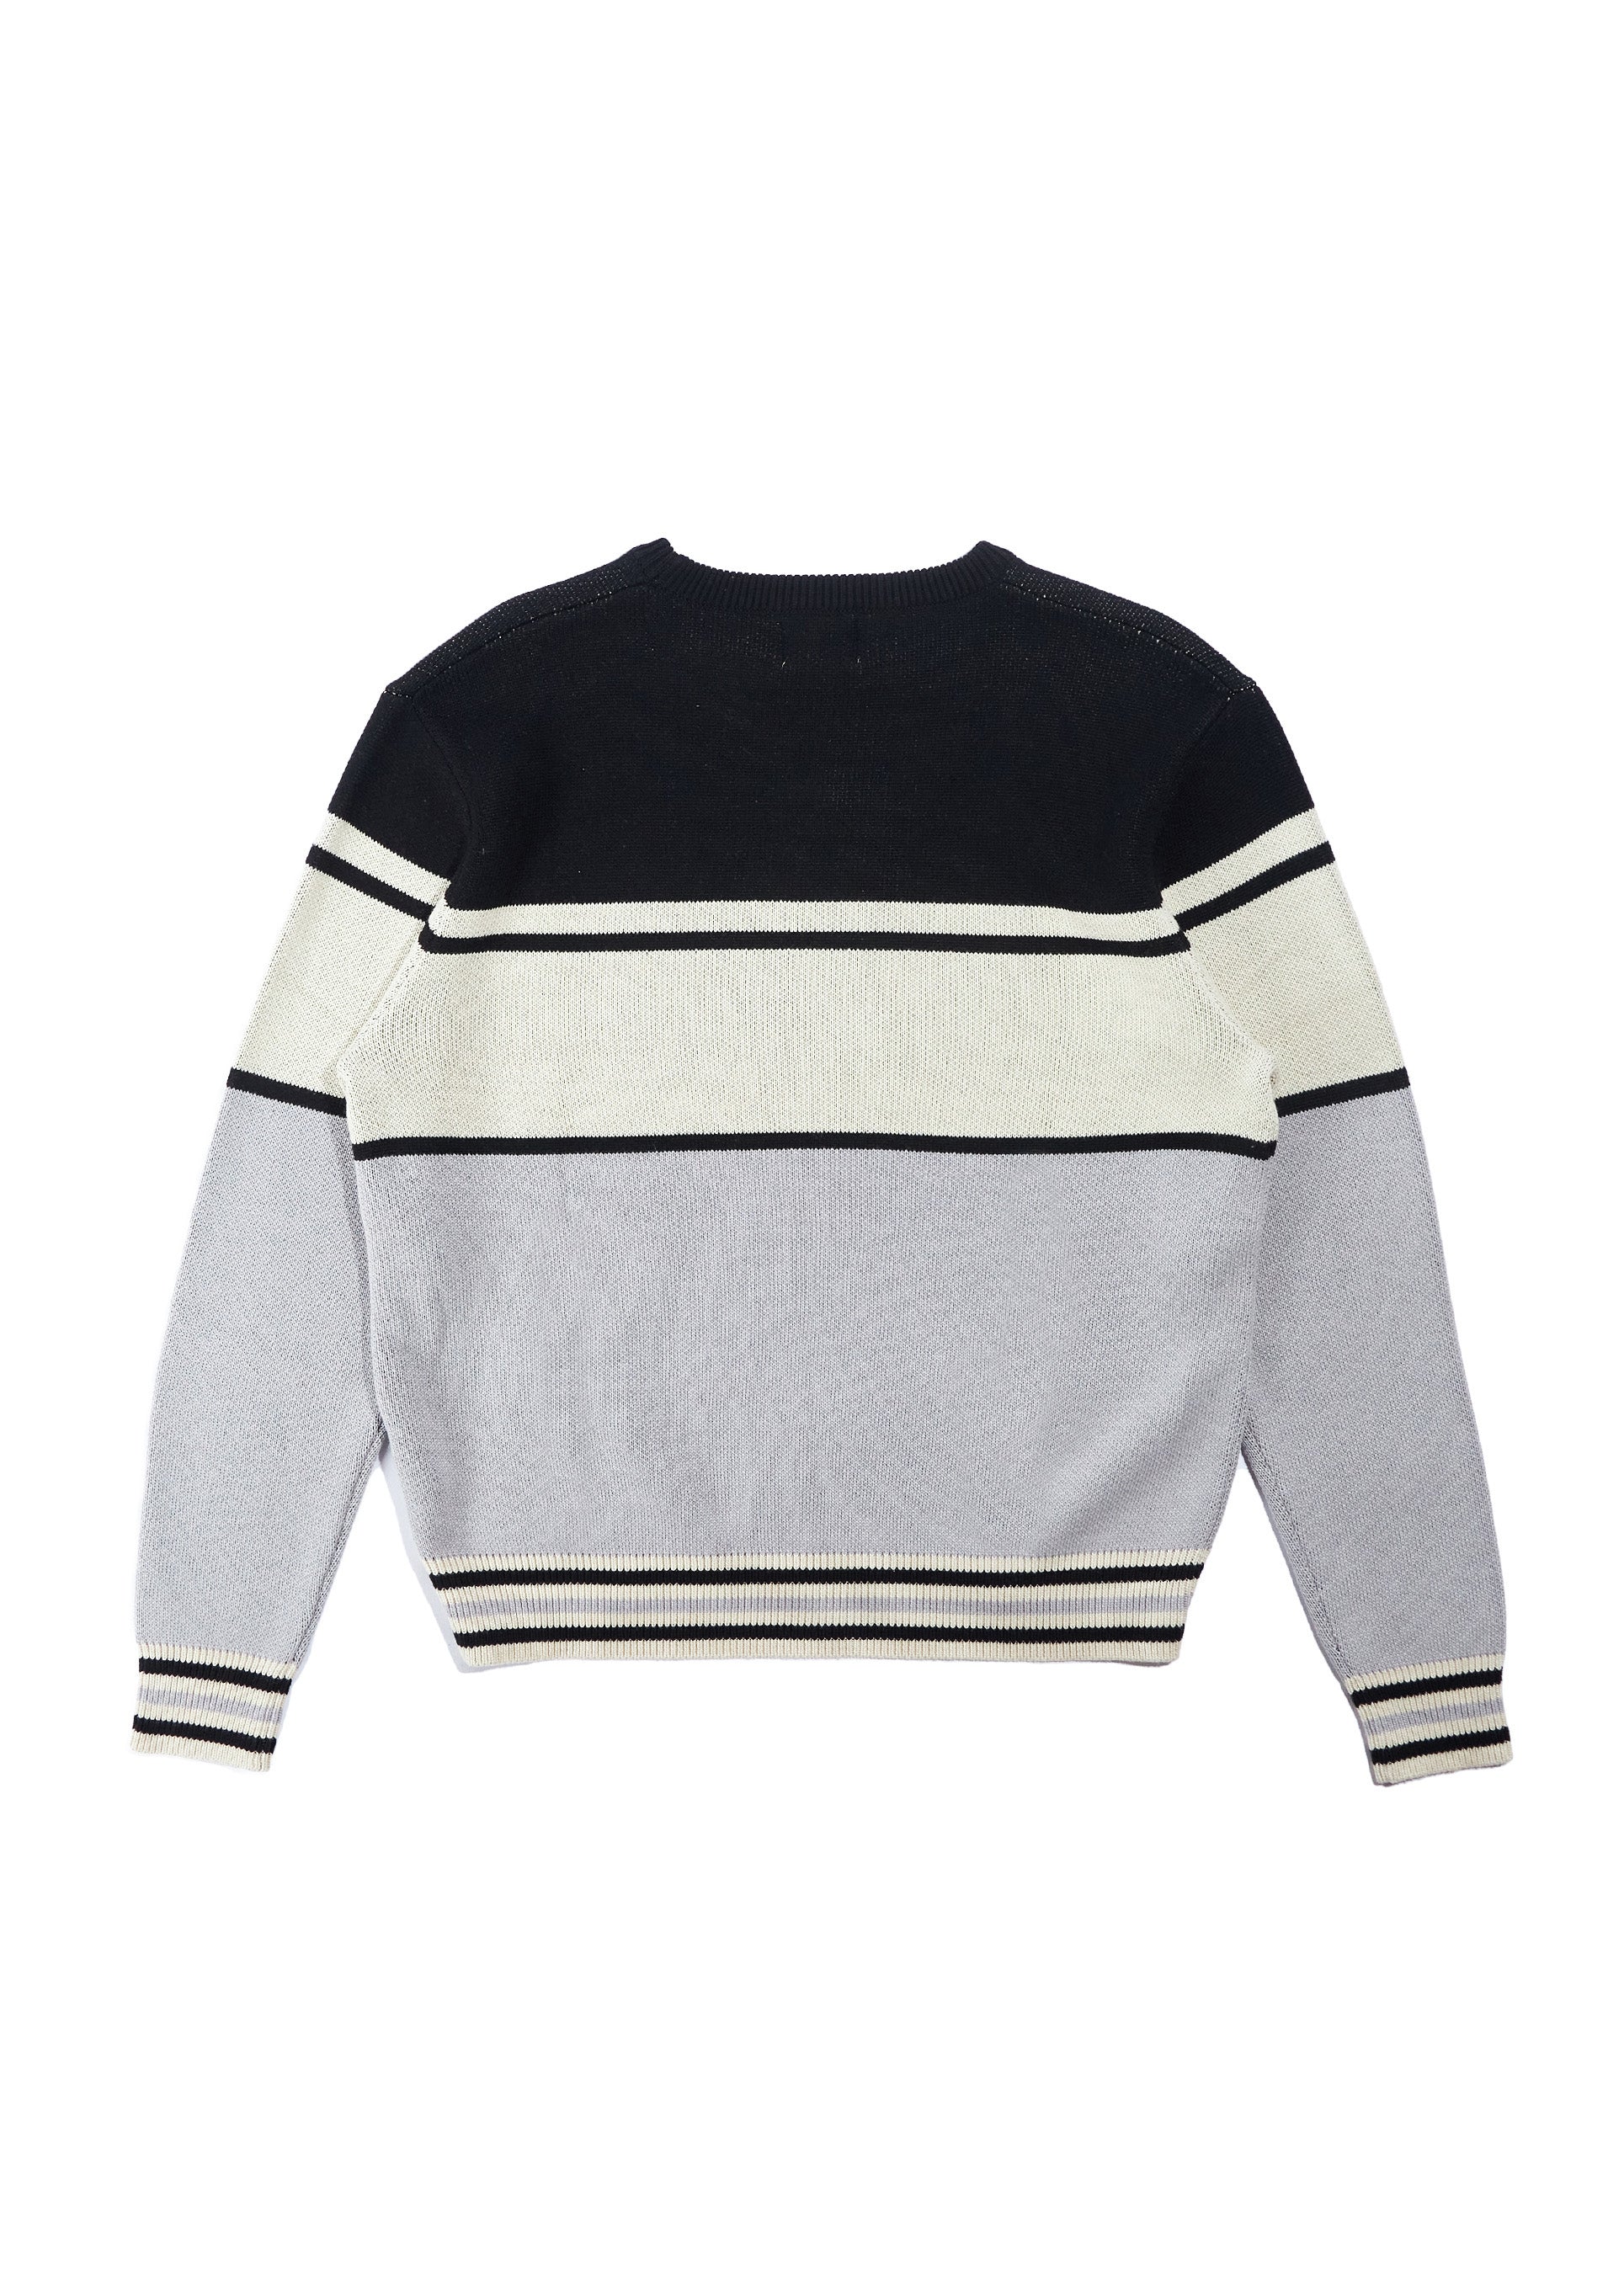 Panel Knit Sweater - Black/Grey